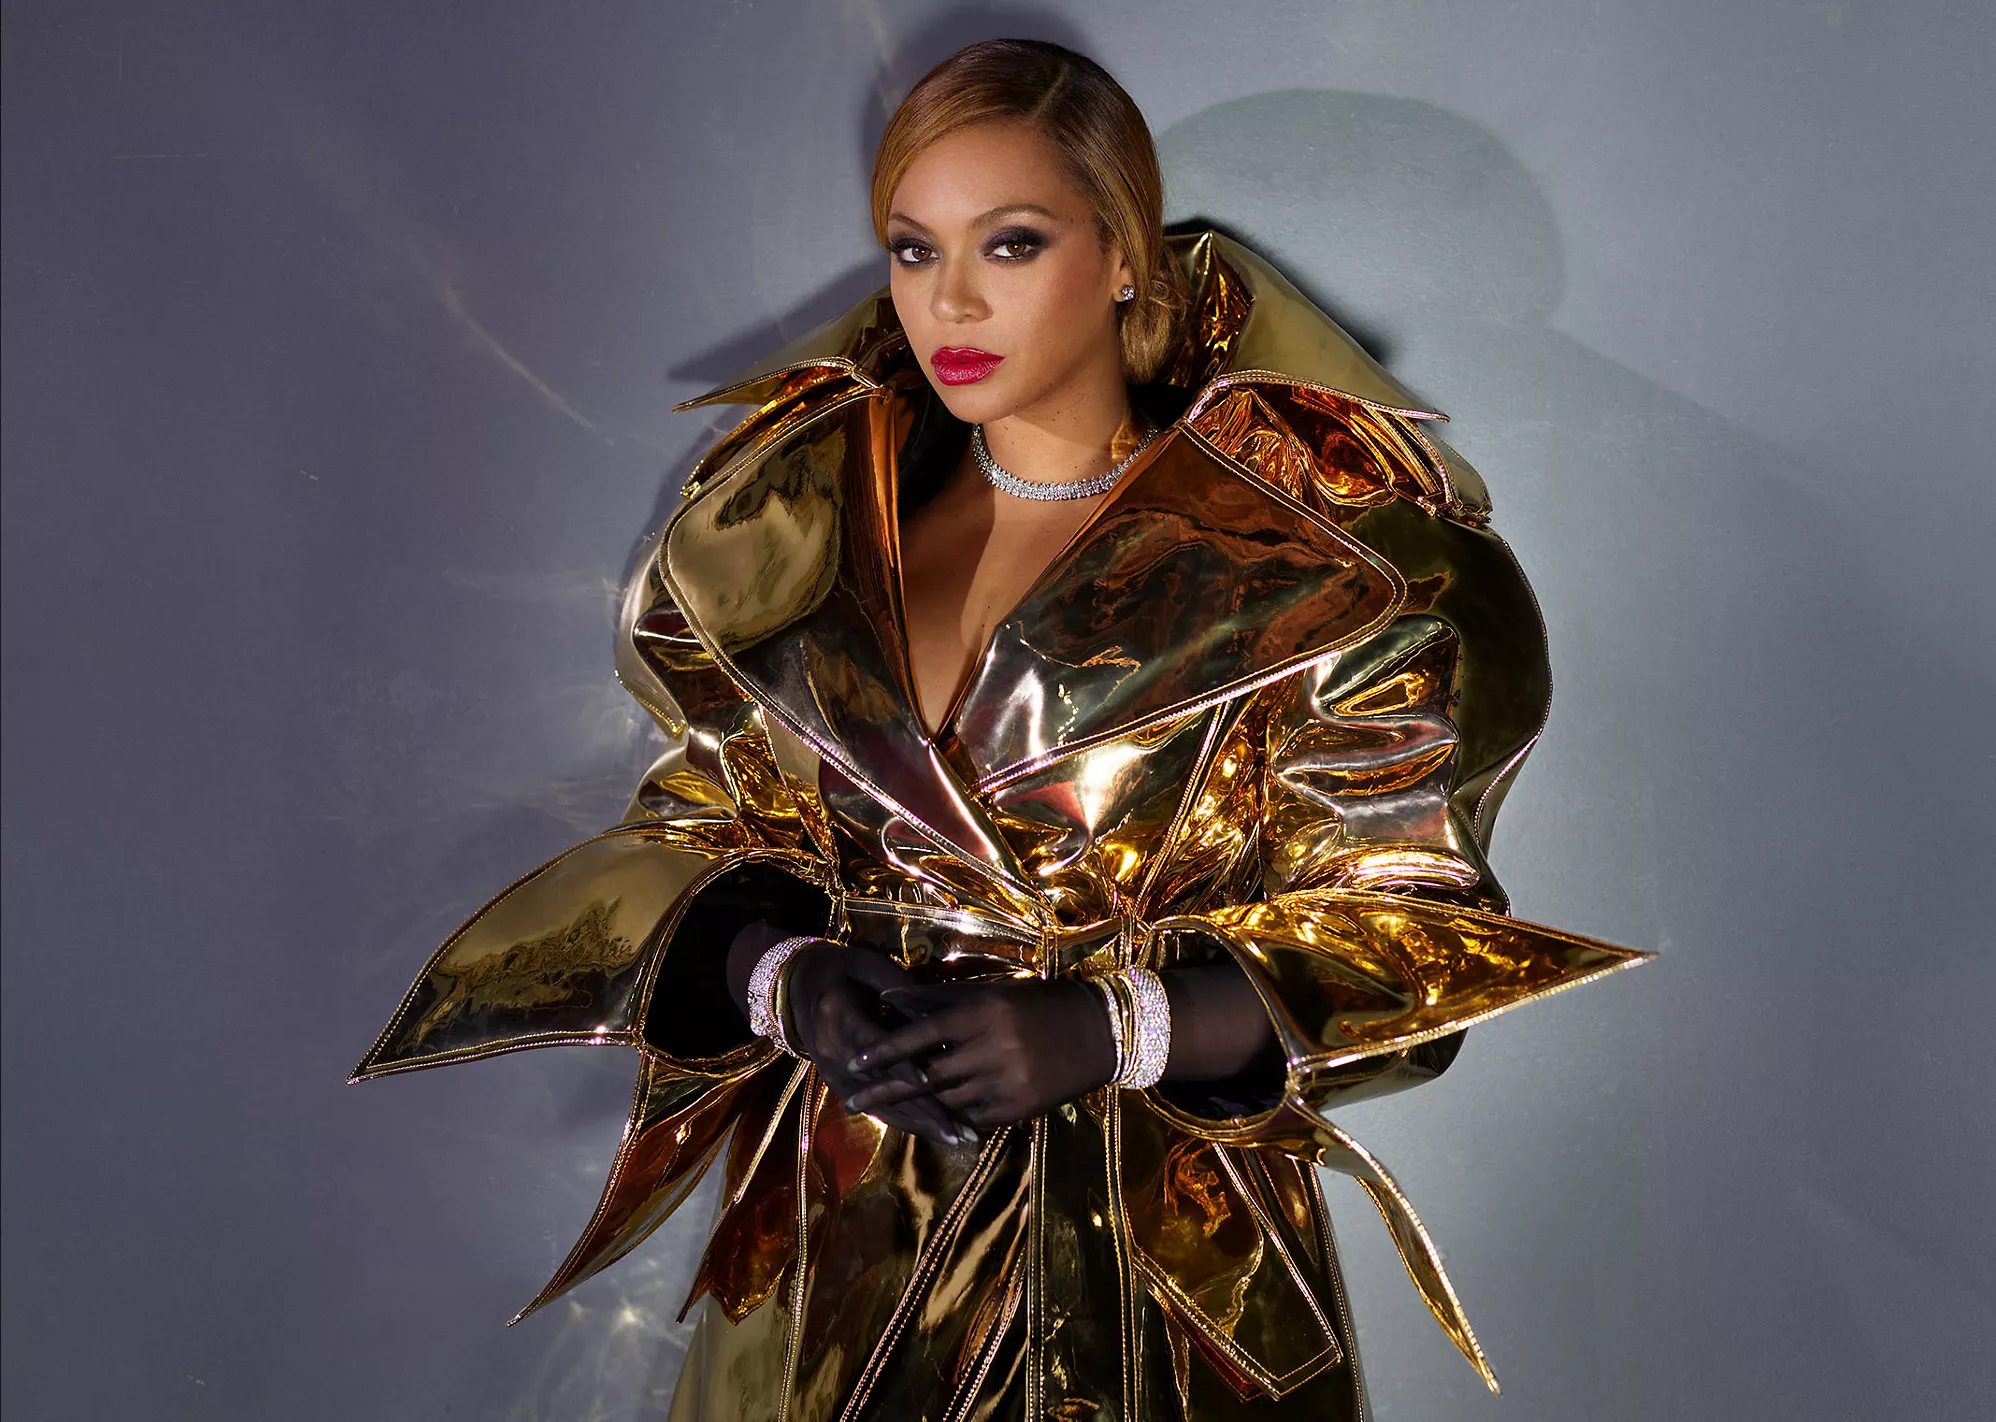 Beyoncé dans la campagne "Lose Yourself in Love" de Tiffany & Co. par Mason Poole